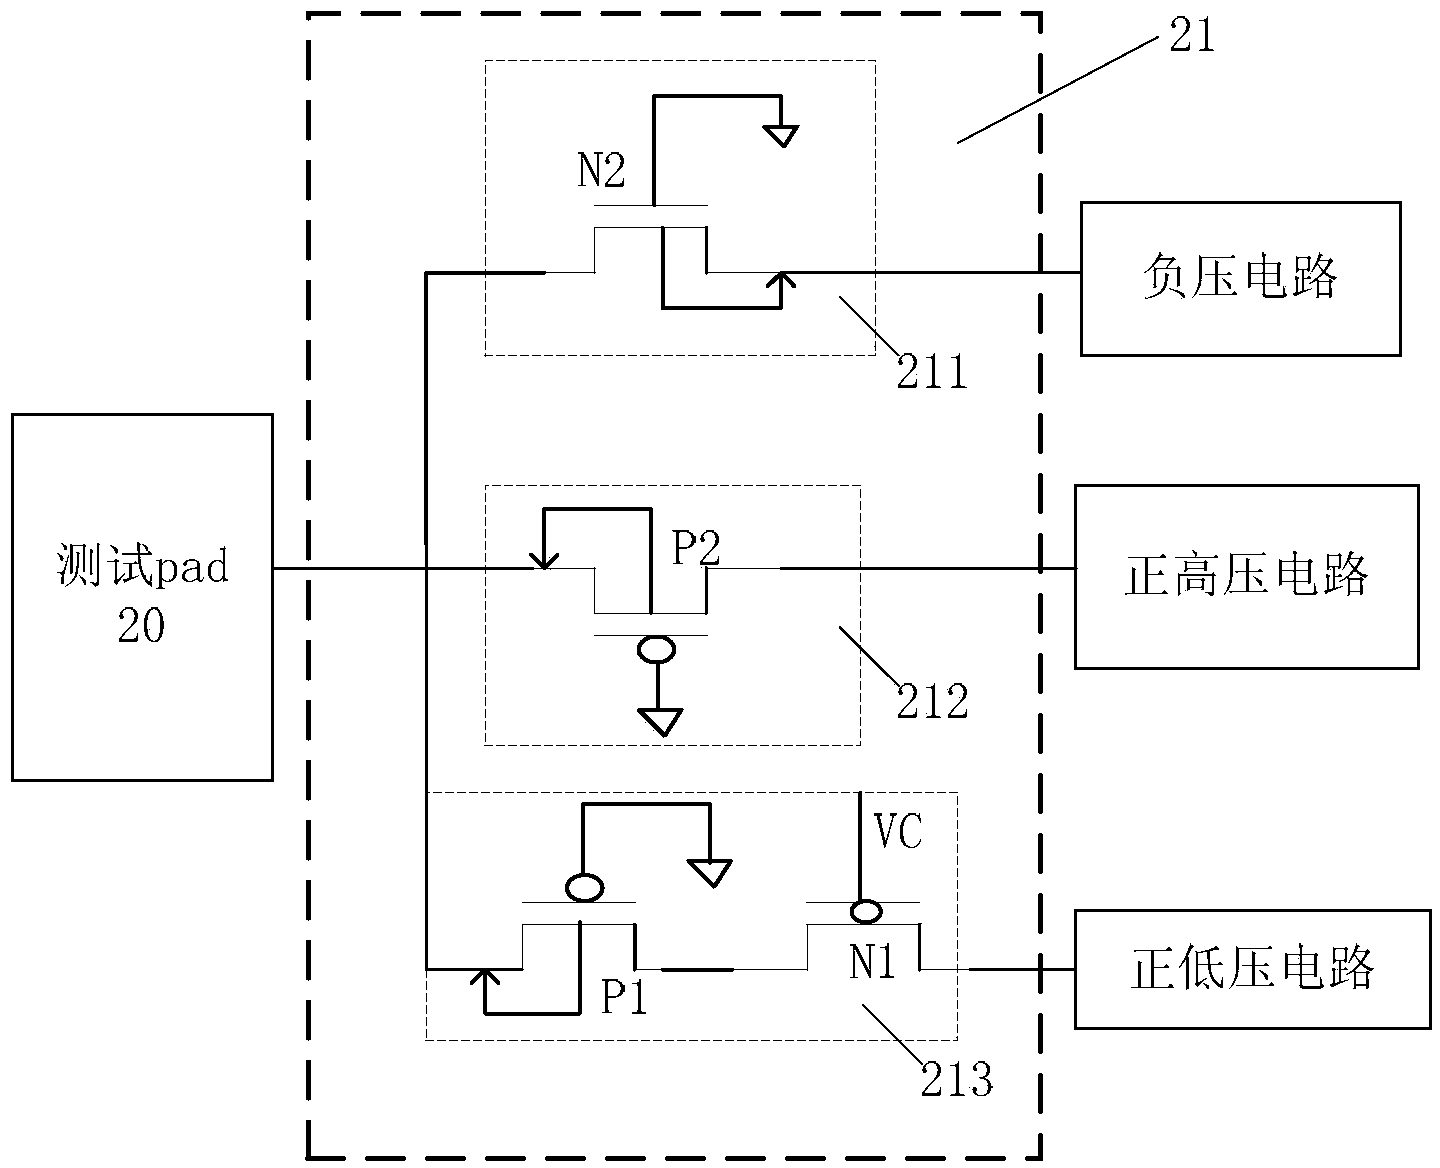 Test pad sharing circuit